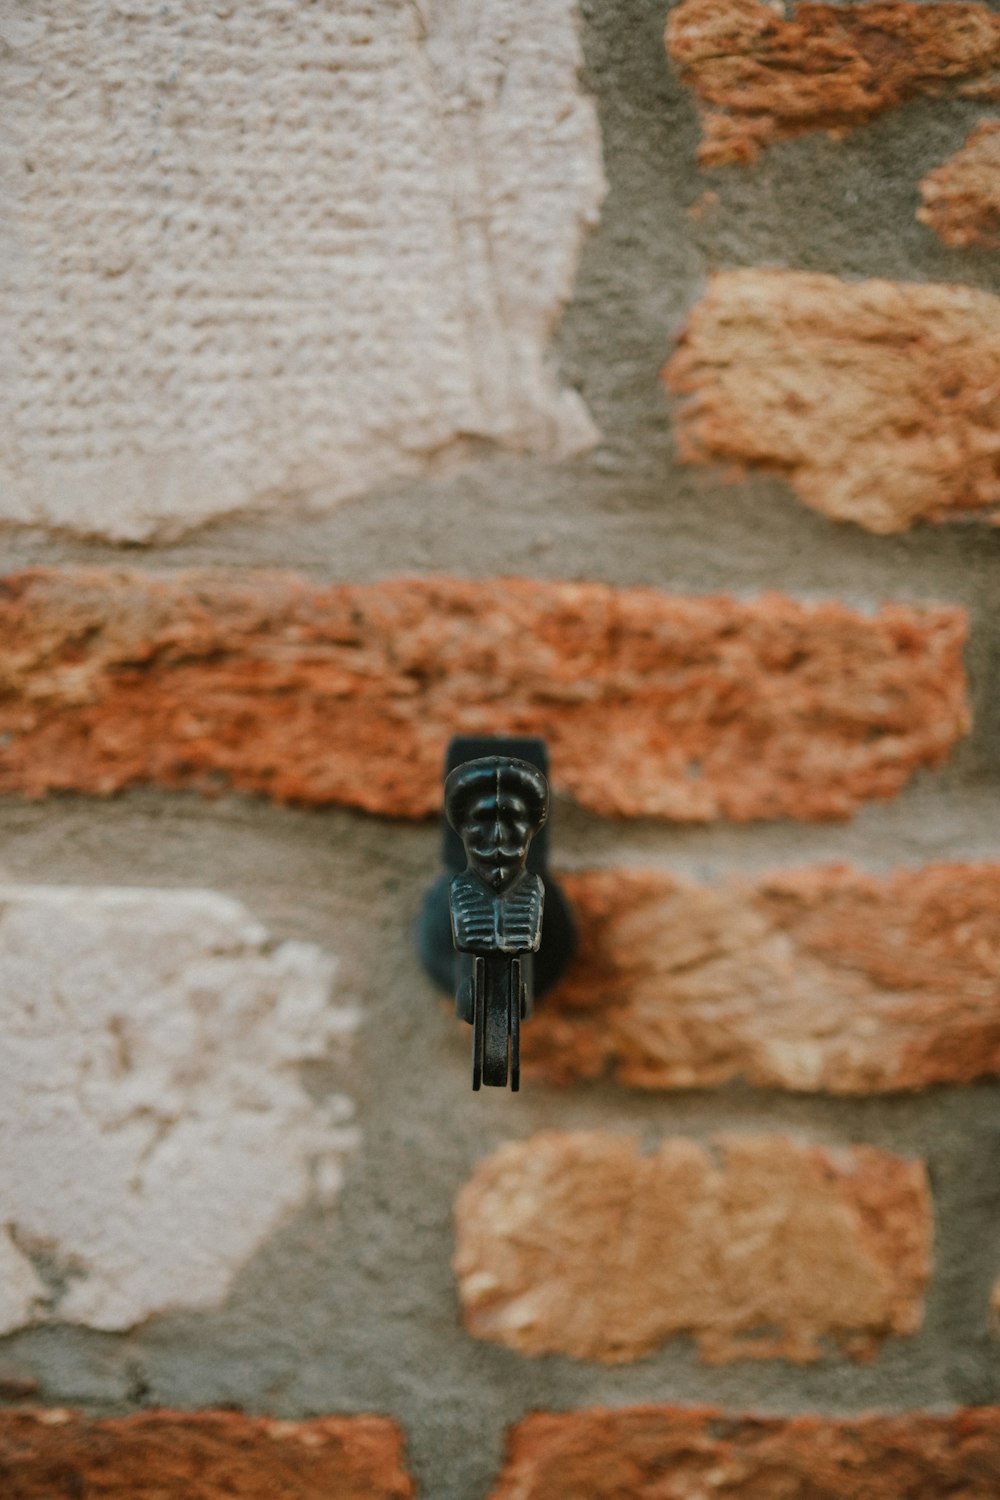 a small black statue on a brick wall